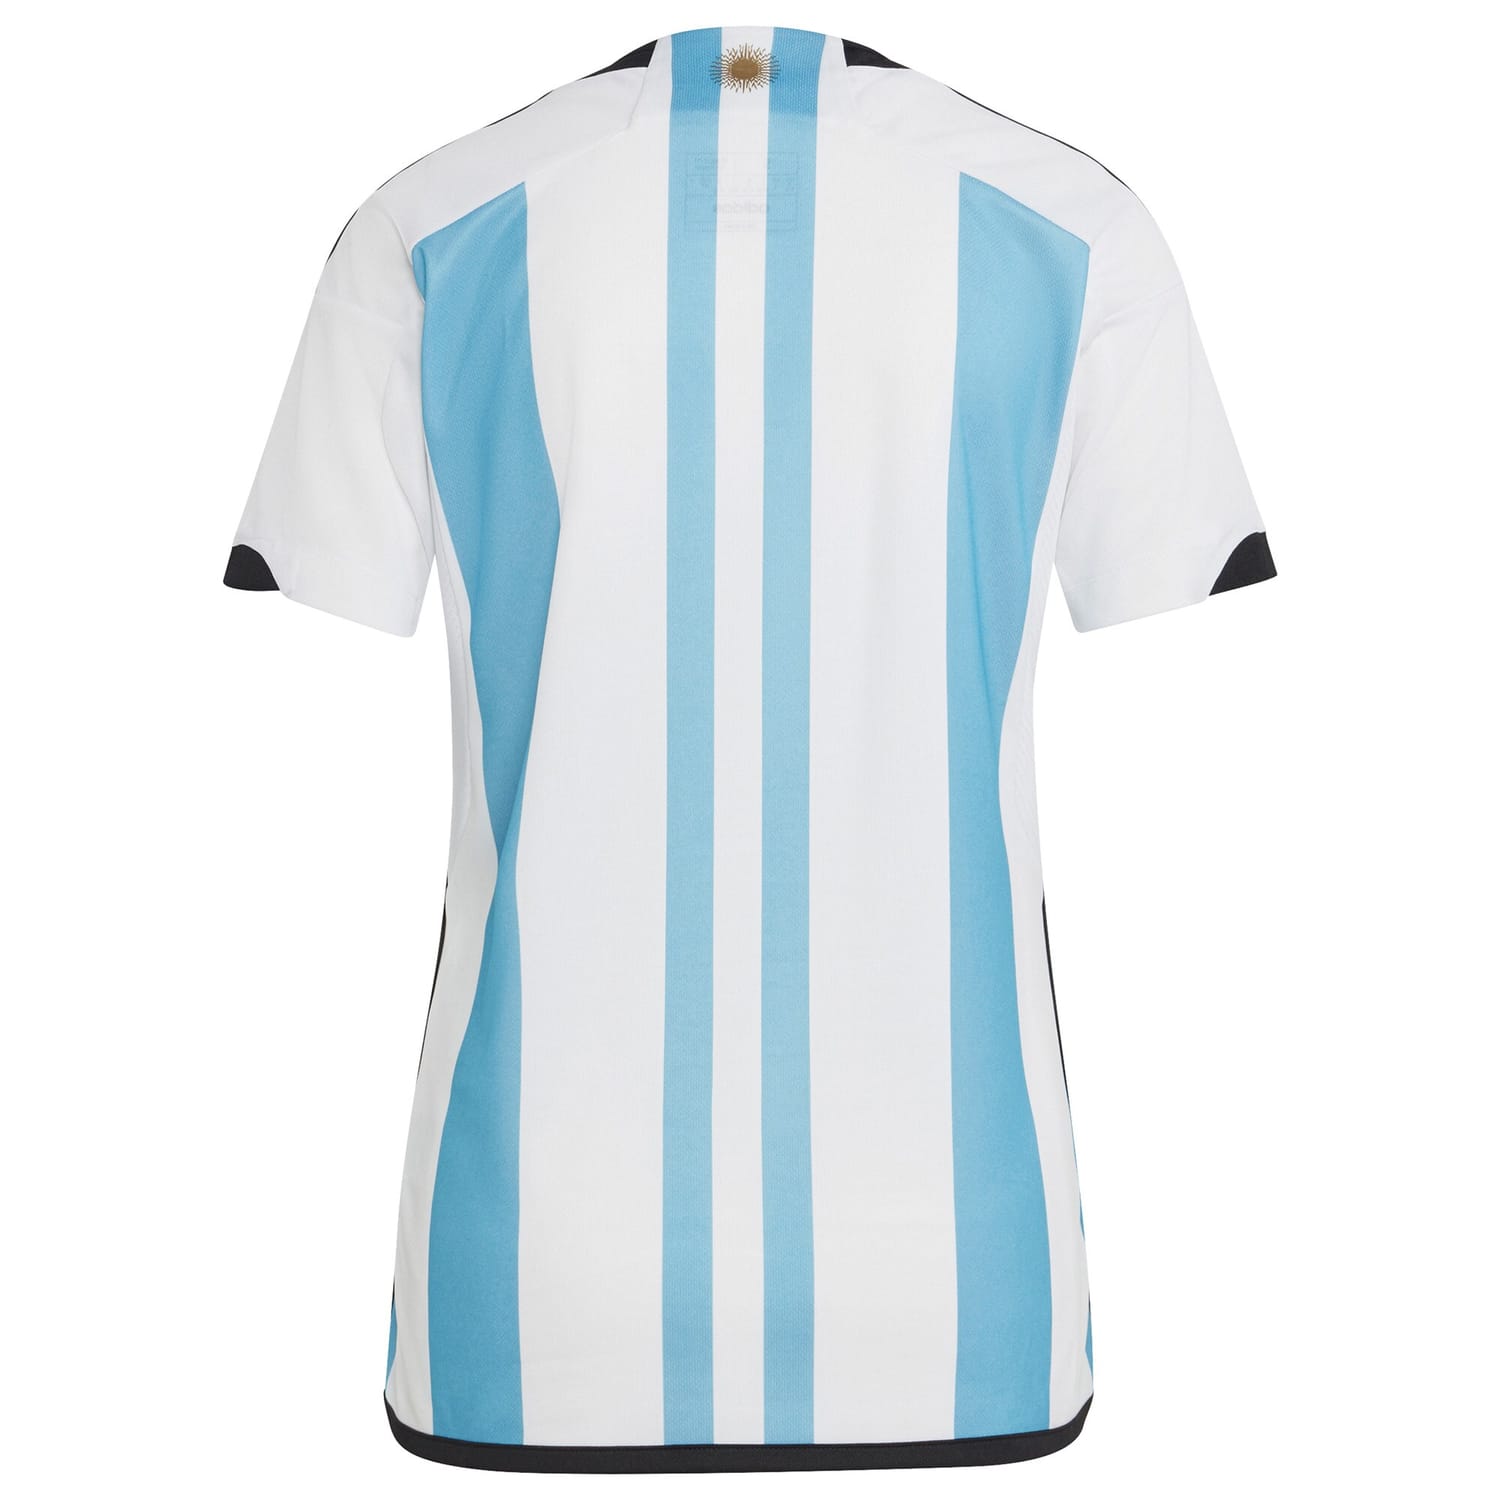 Argentina National Team Home Winners Jersey Shirt White/Light Blue 2022 for Women